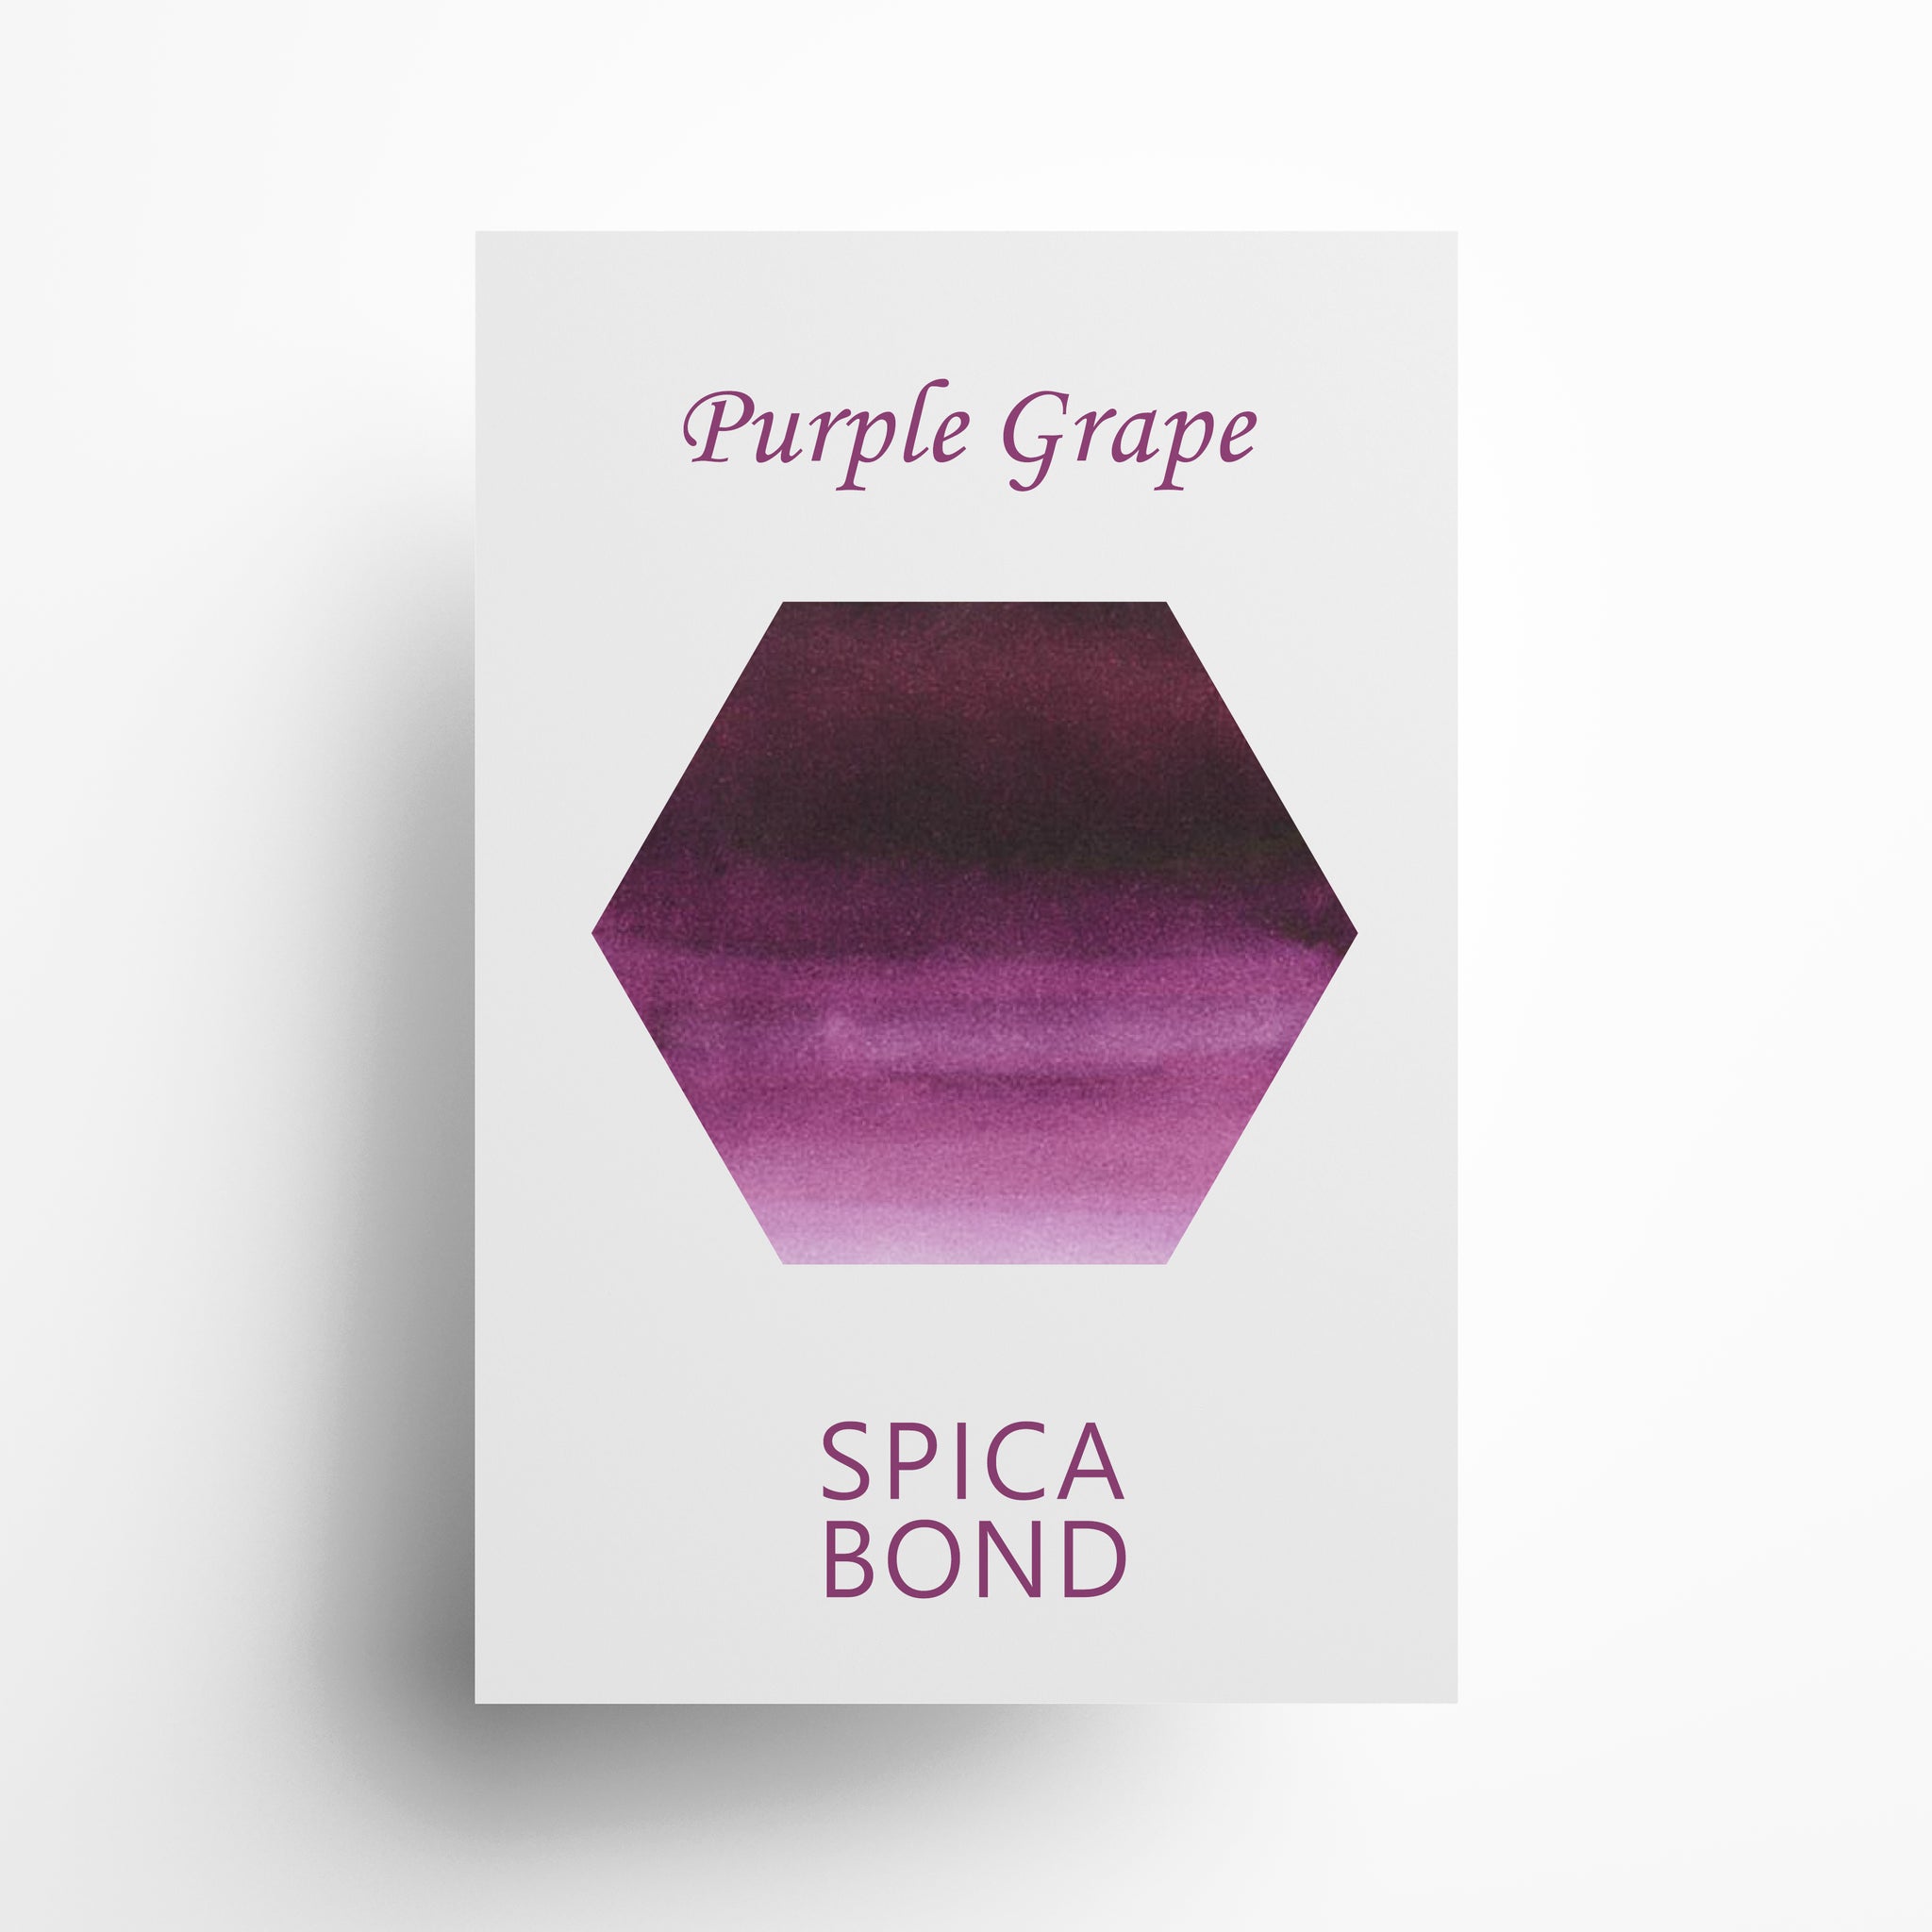 GazingFar homemade fountain pen ink- Purple Grape, A color of noble